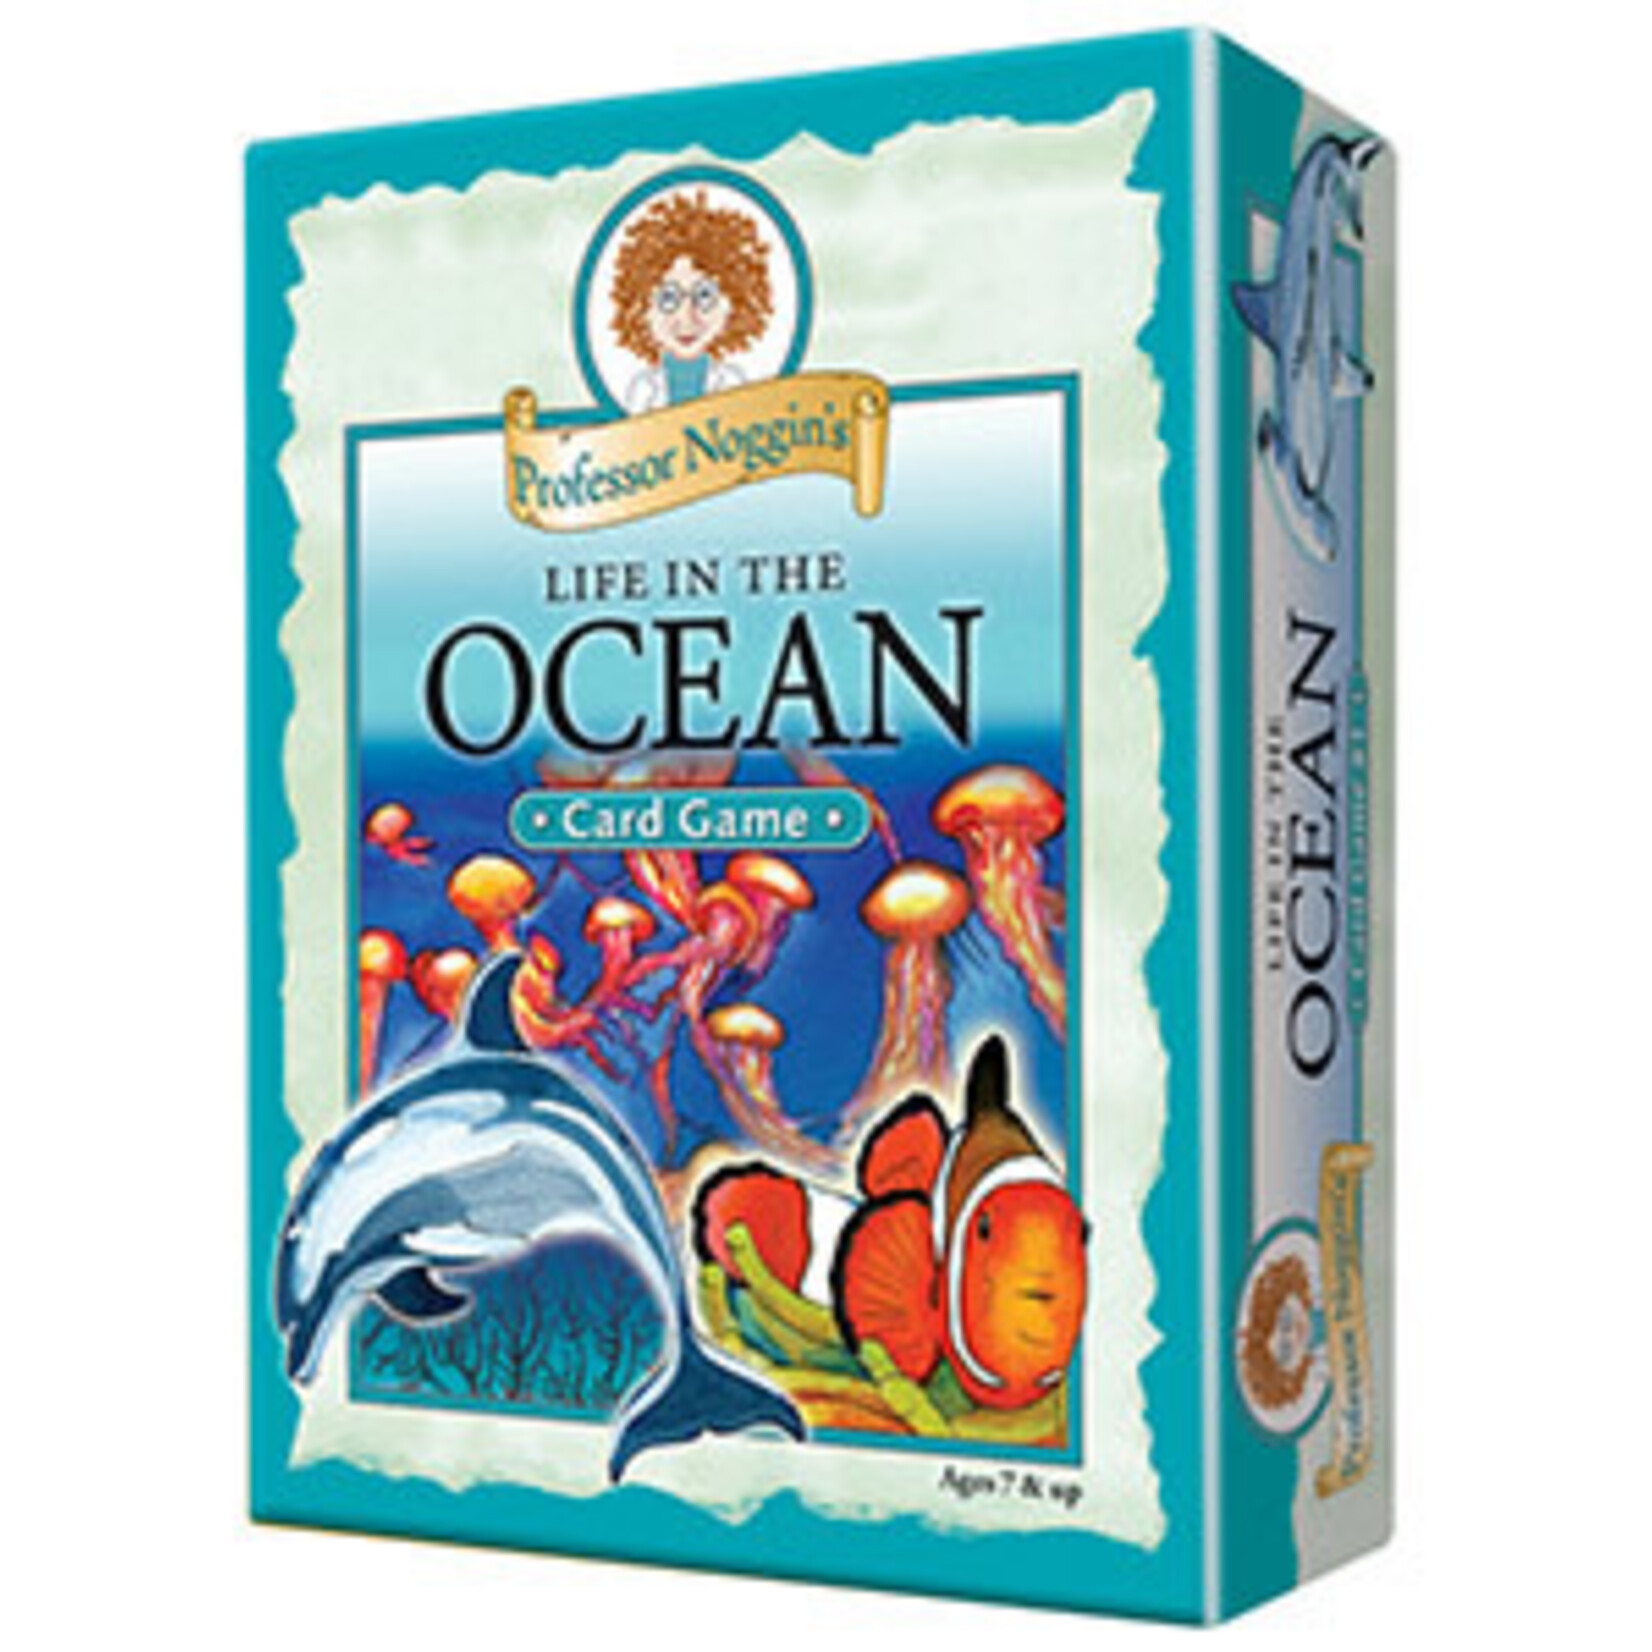 Professor Noggin Professor Noggin's Life in the Ocean: Card Game